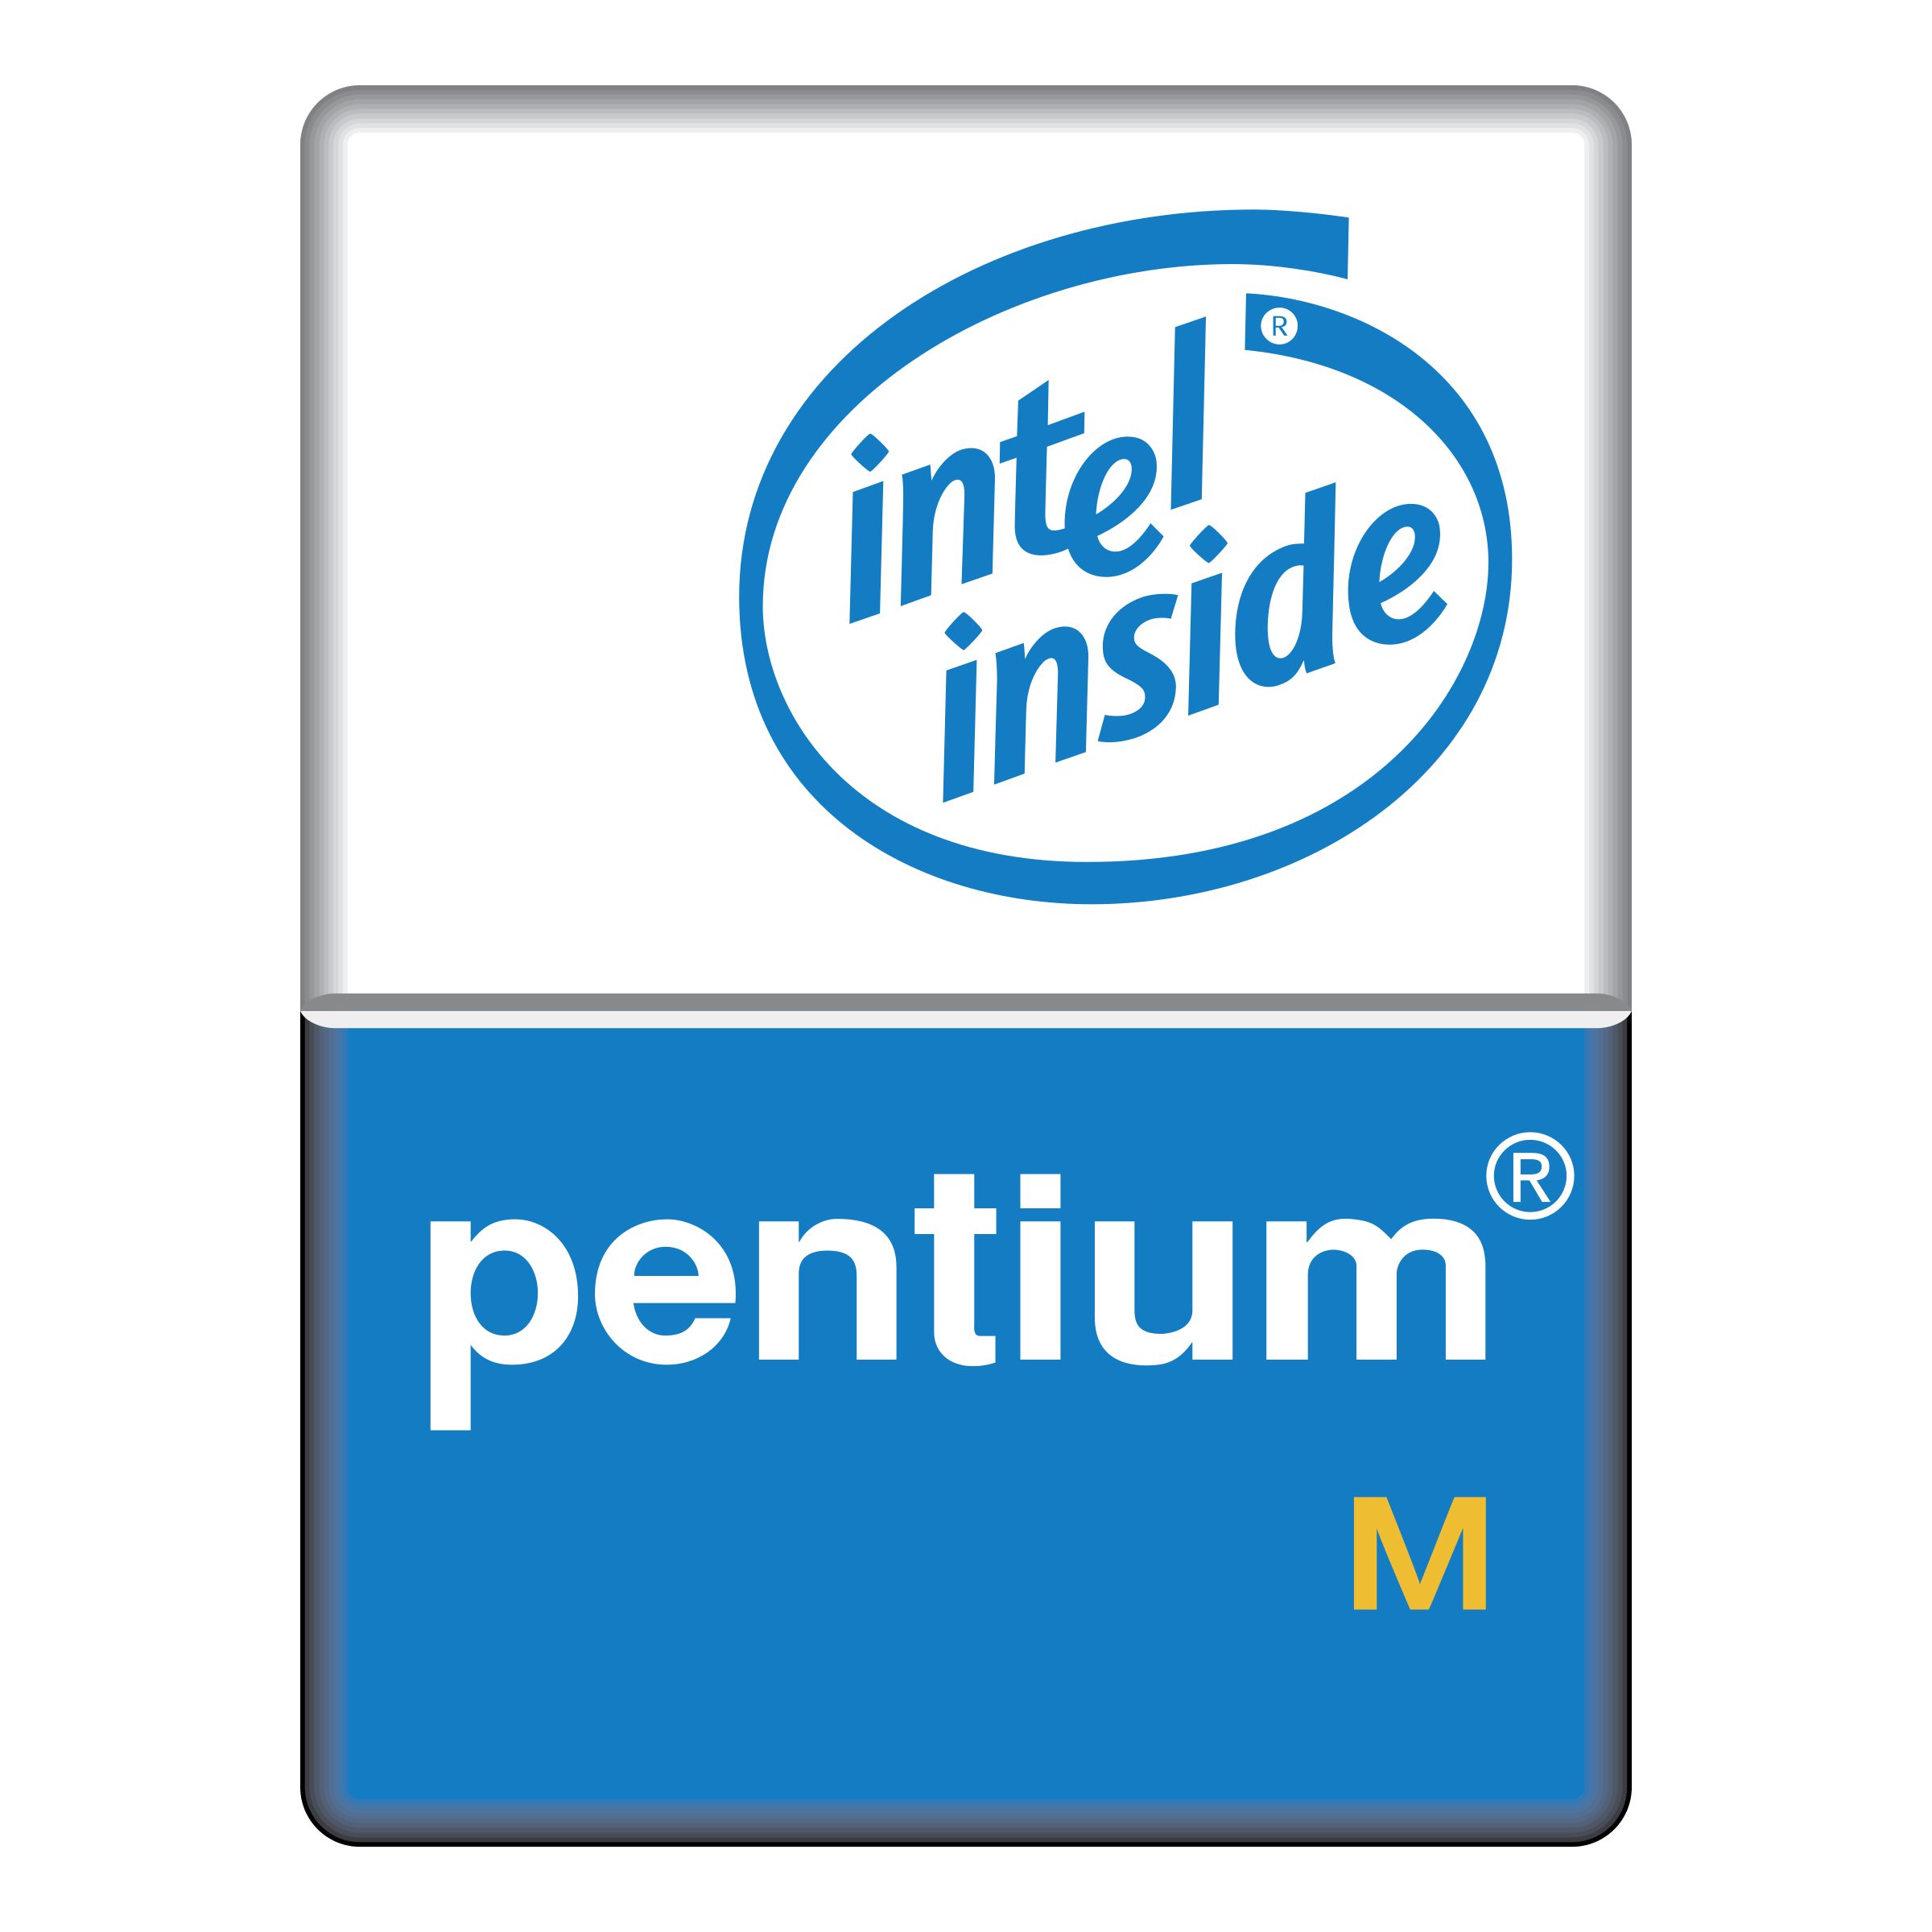 Intel Pentium Processor Logo - Pentium M Processor Logo PNG Transparent & SVG Vector